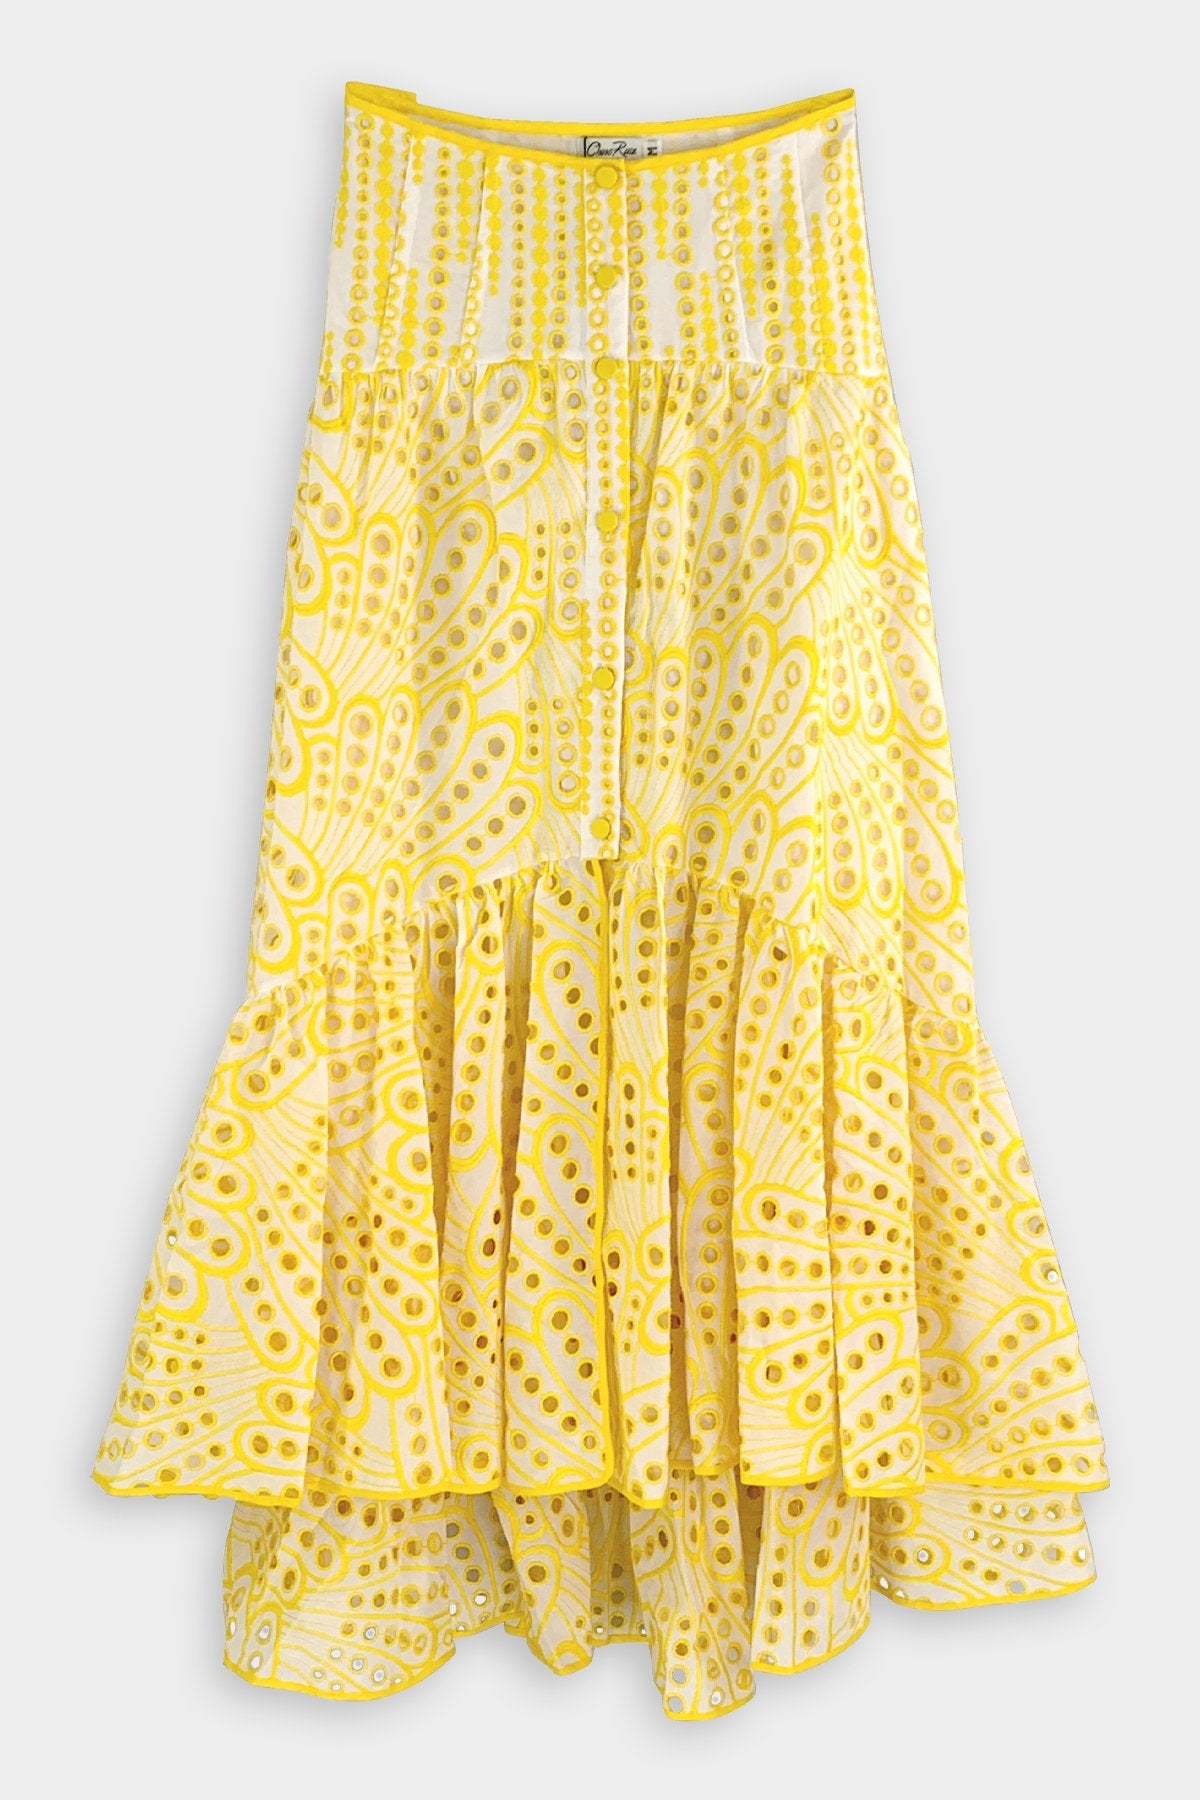 Gina Long Skirt in Solar Yellow - shop-olivia.com